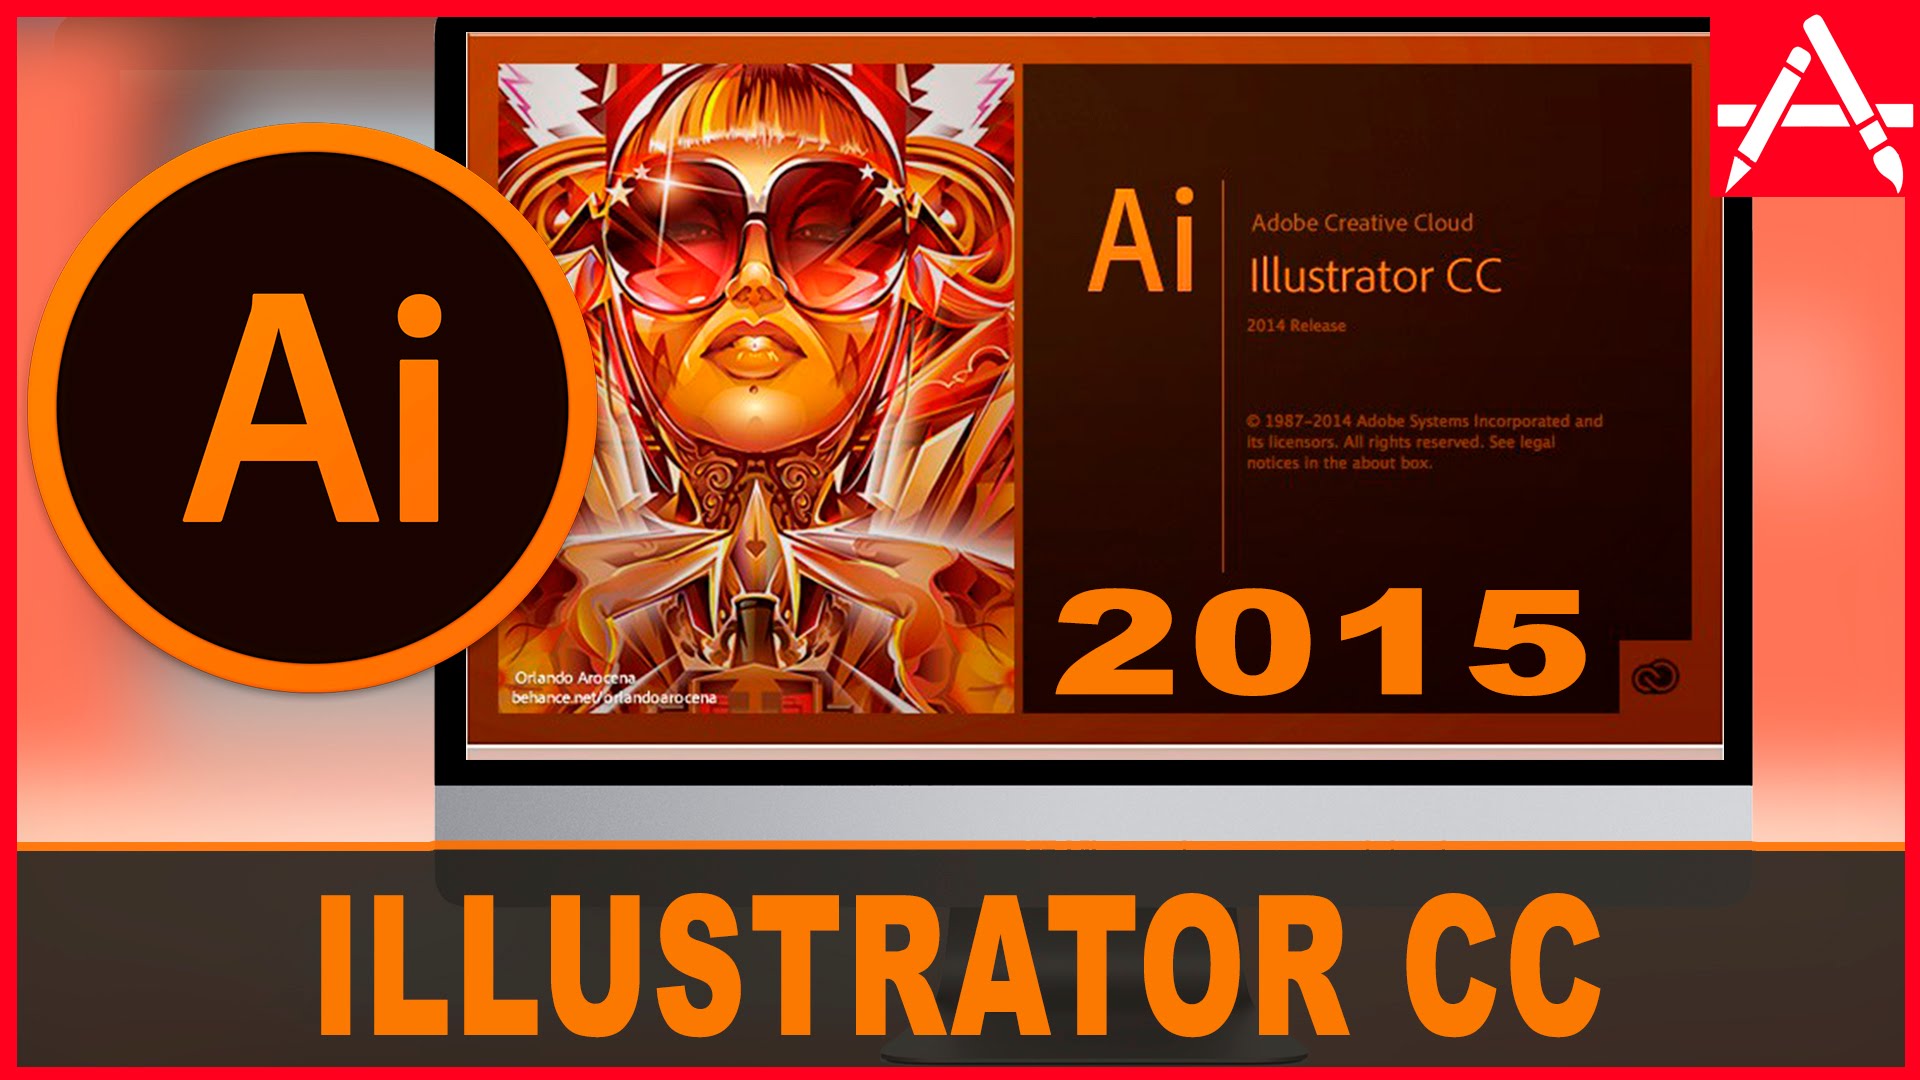 Adobe Illustrator CC 2015 Crack With Activation Key Free Download